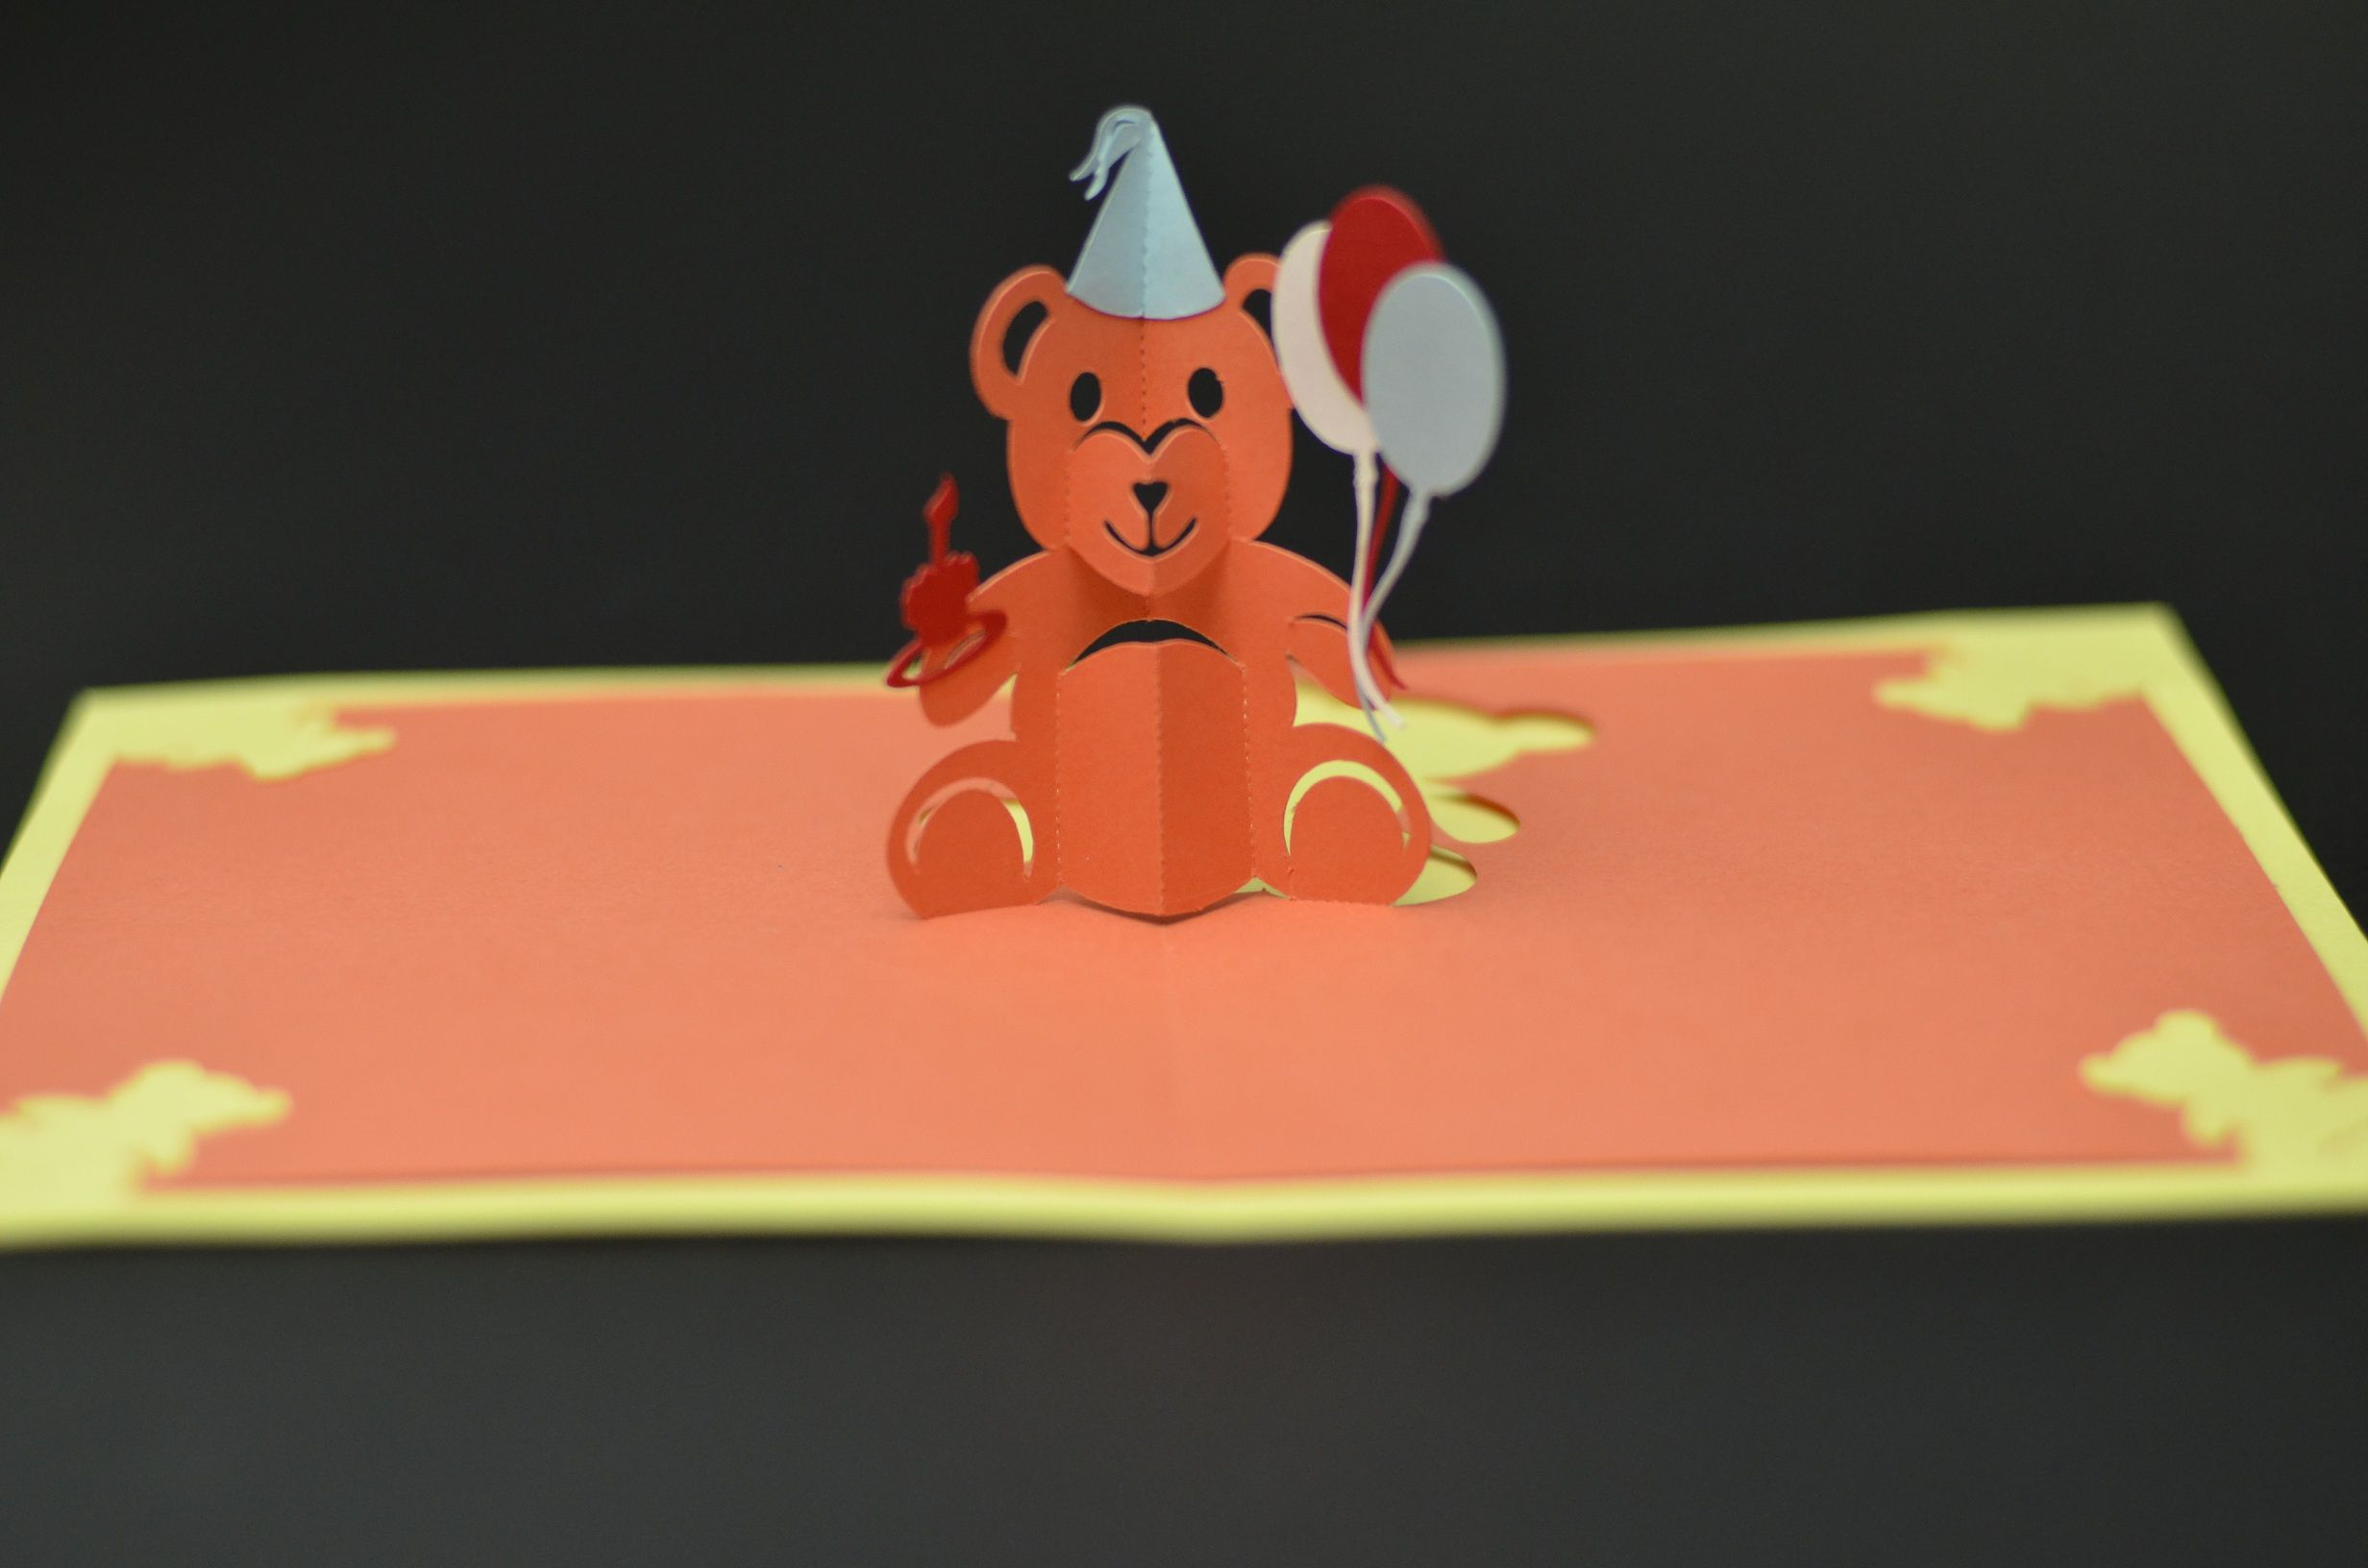 Teddy Bear Pop Up Card: Tutorial And Template | Pop Up Card With Teddy Bear Pop Up Card Template Free